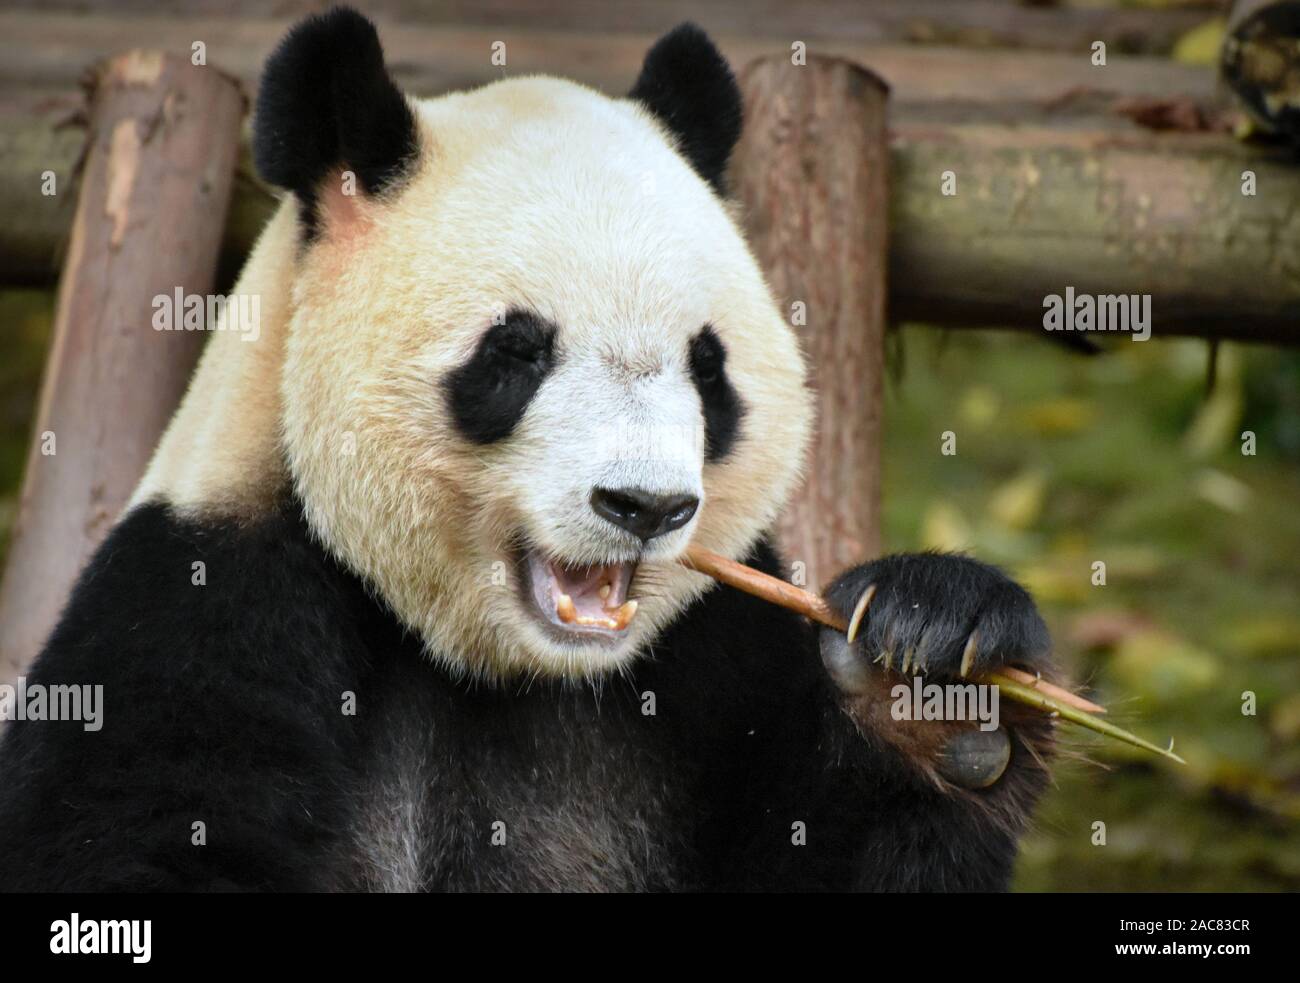 Panda bear munching on bamboo shoot, close up front face portrait Stock Photo